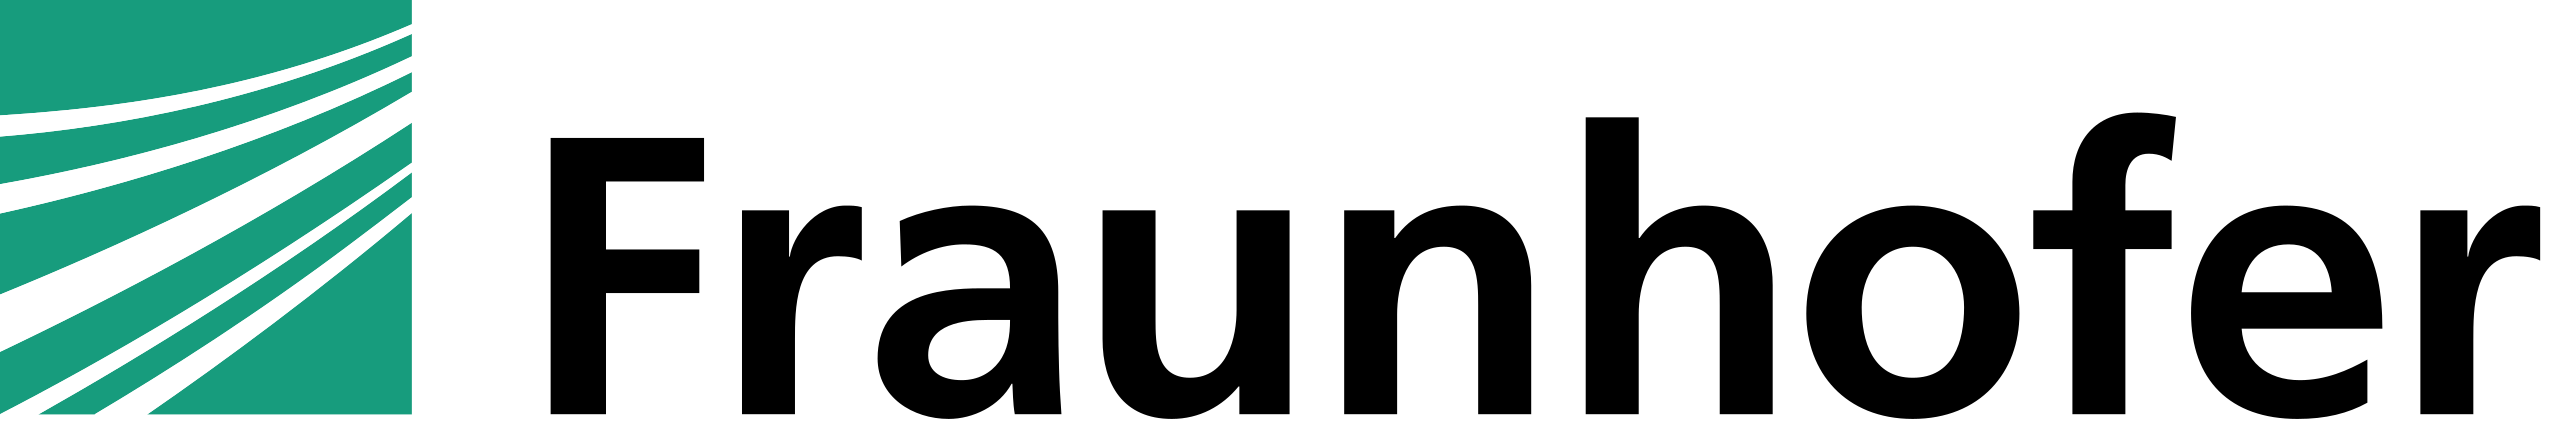 Fraunhofer-logo.svg